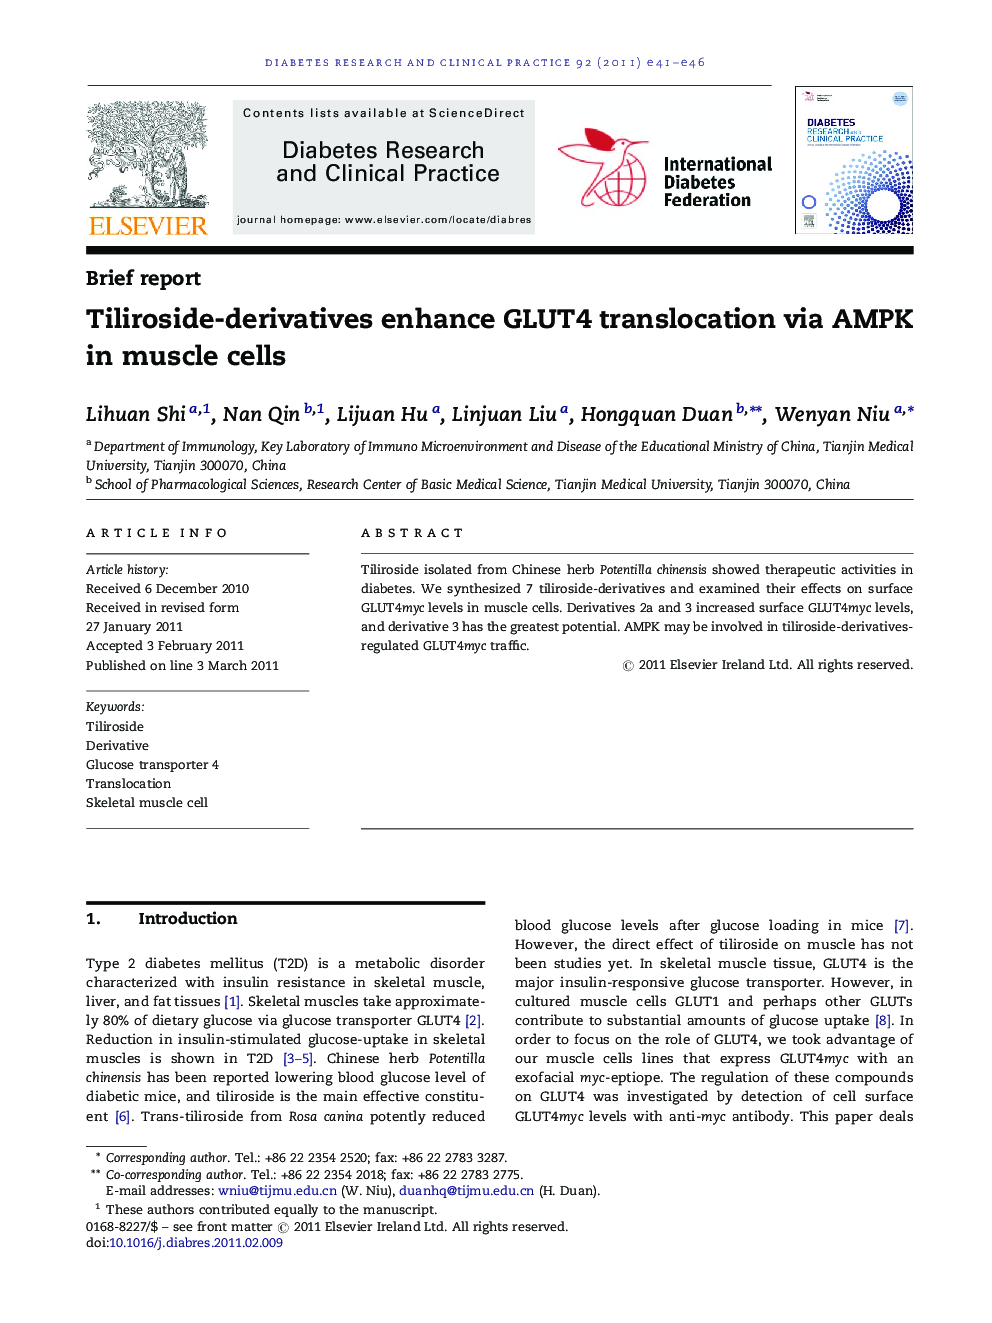 Brief reportTiliroside-derivatives enhance GLUT4 translocation via AMPK in muscle cells